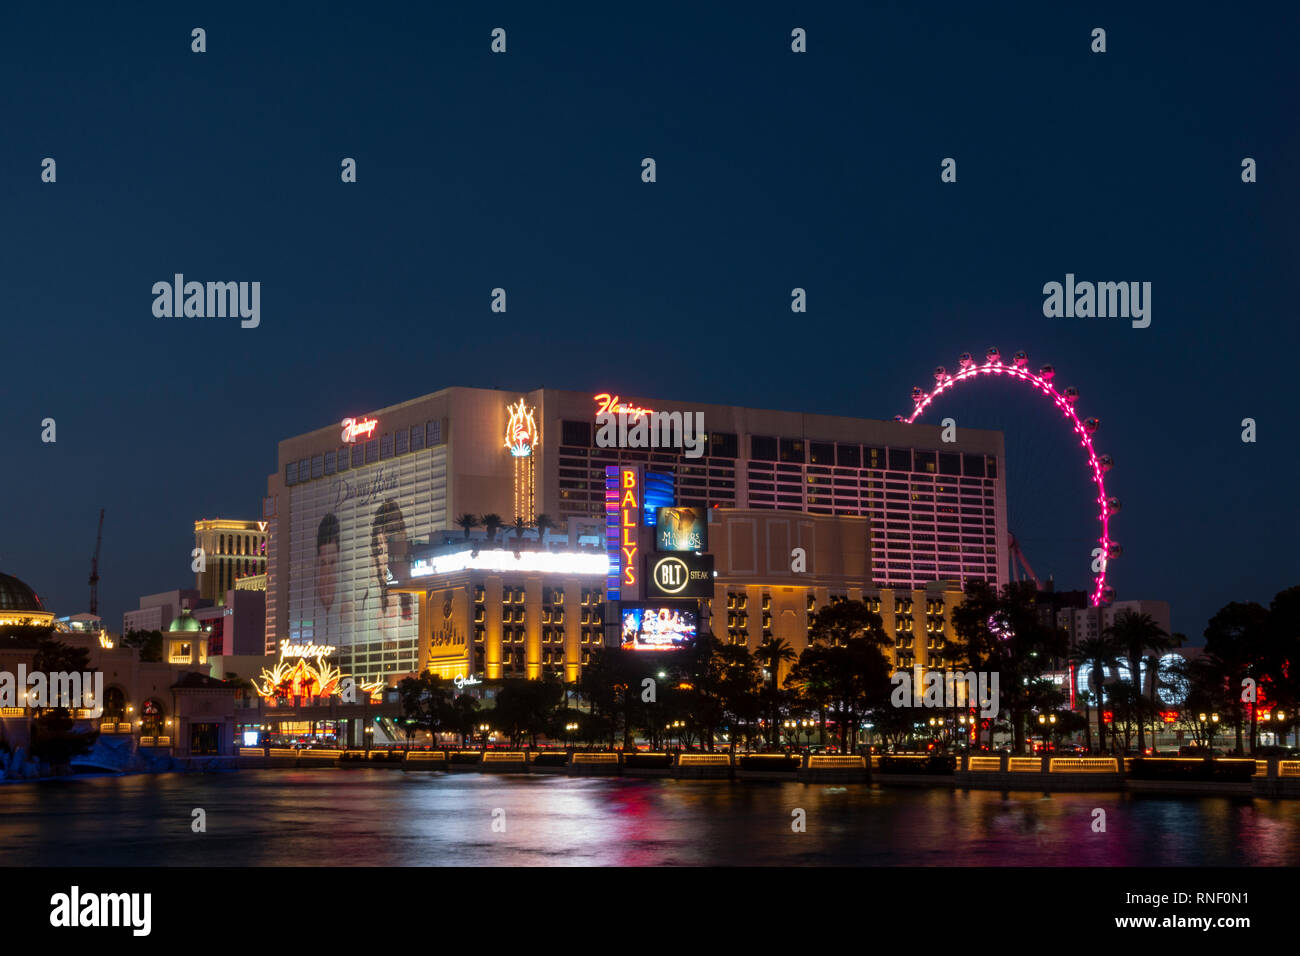 Night view of Flamingo Las Vegas Resort, Las Vegas, Nevada, United States. Stock Photo